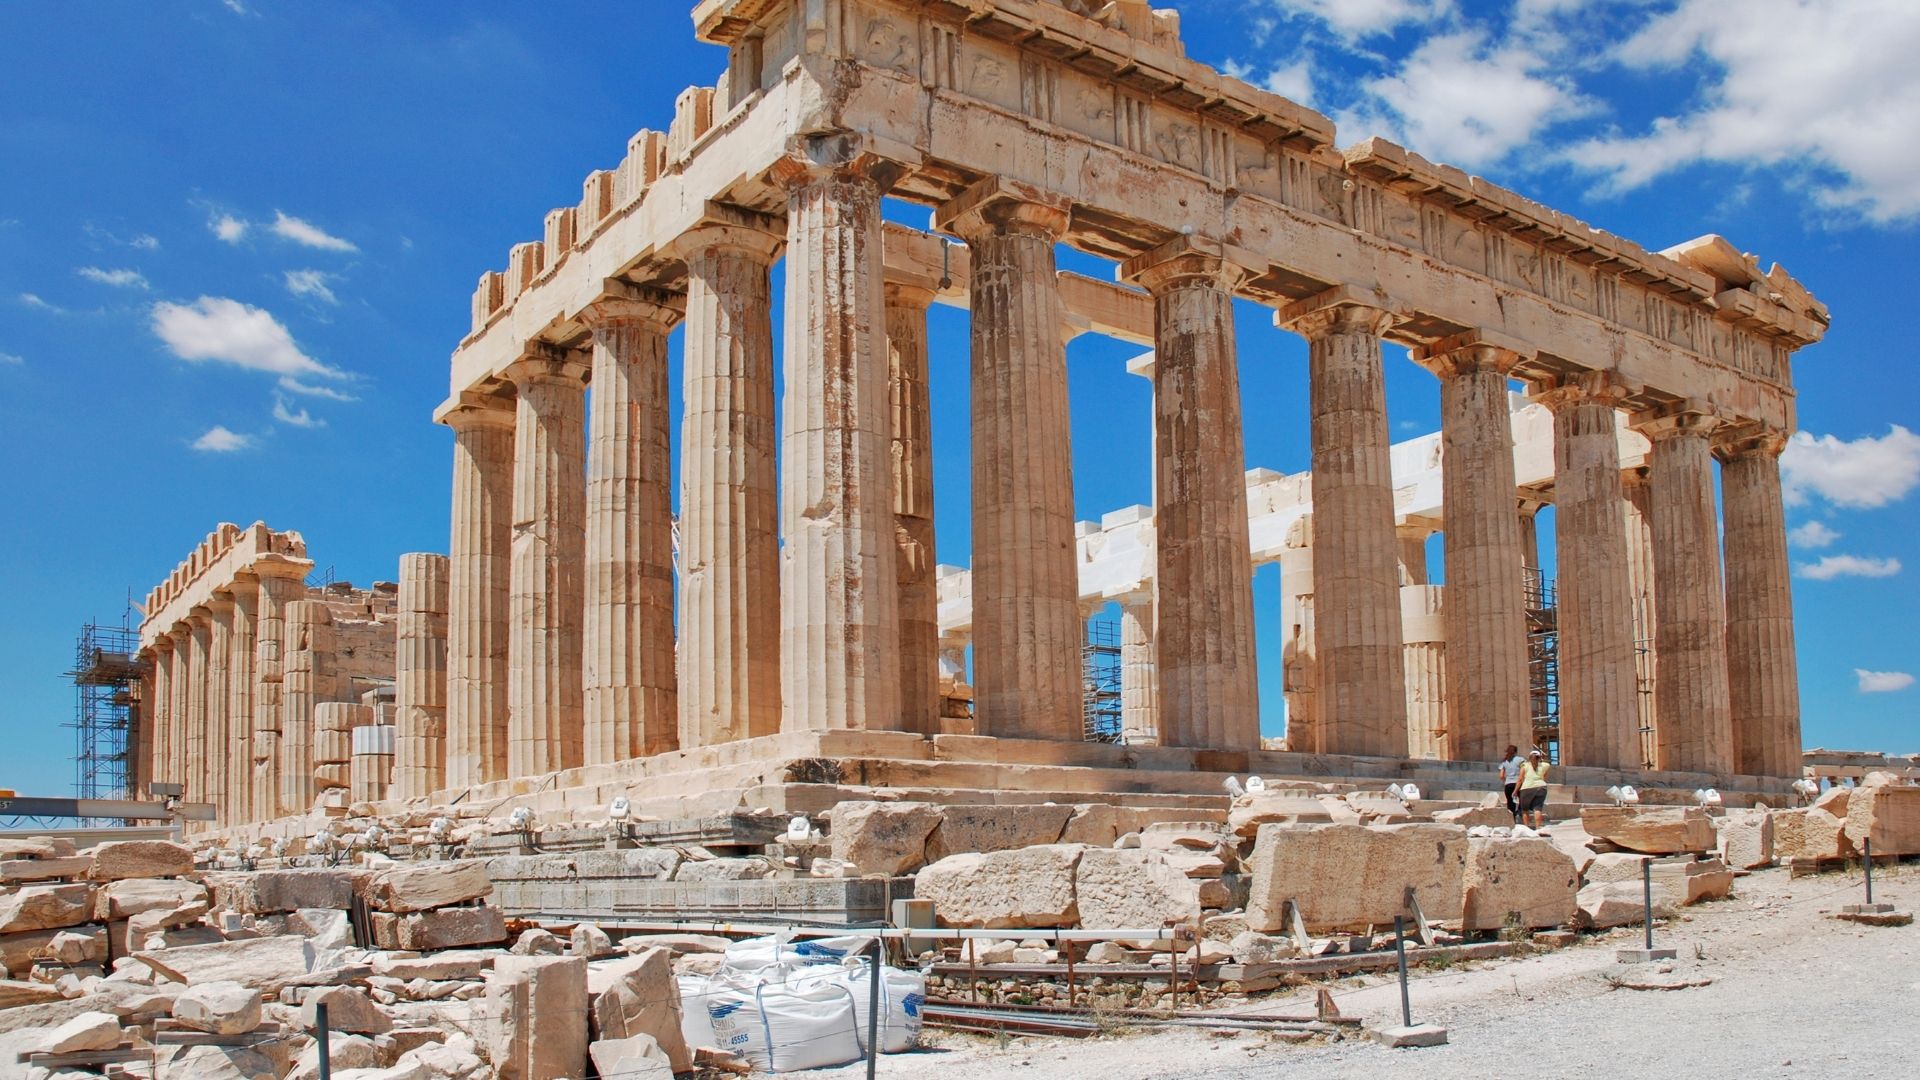 photograph of the Parthenon